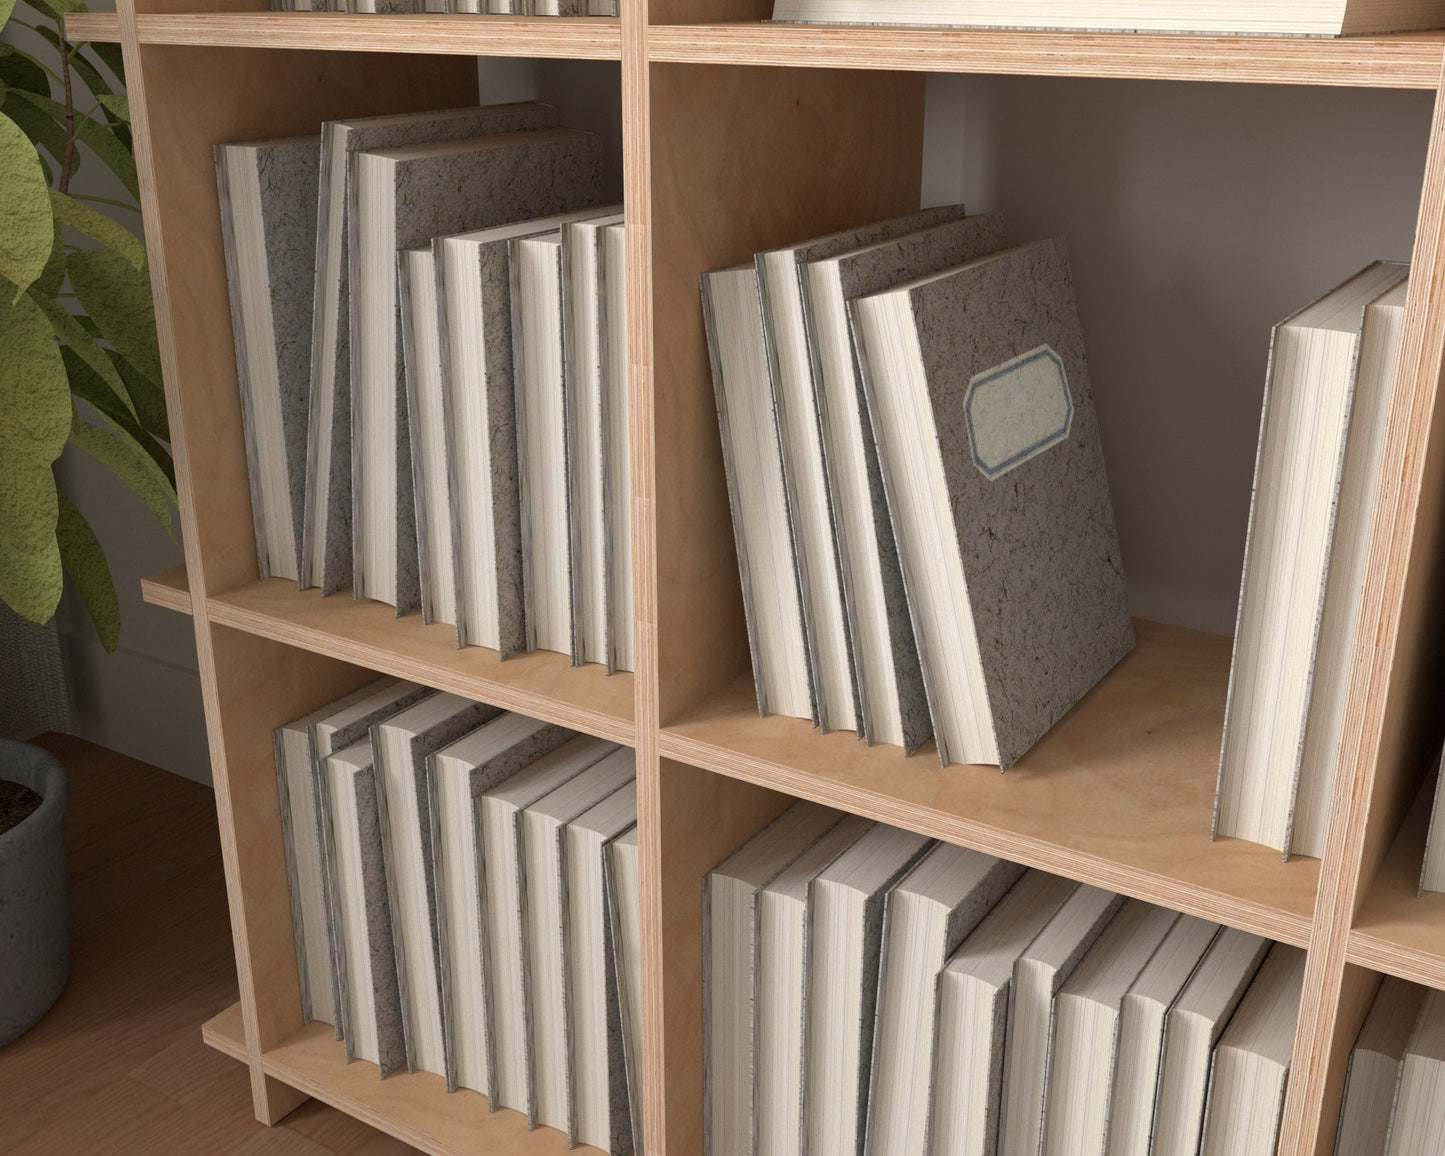 4x3 Modern Modular Plywood Bookshelf Kallax modules japandi design for vinyl records, books, music studio, home - 150x115x33cm / 59”x45”x13”